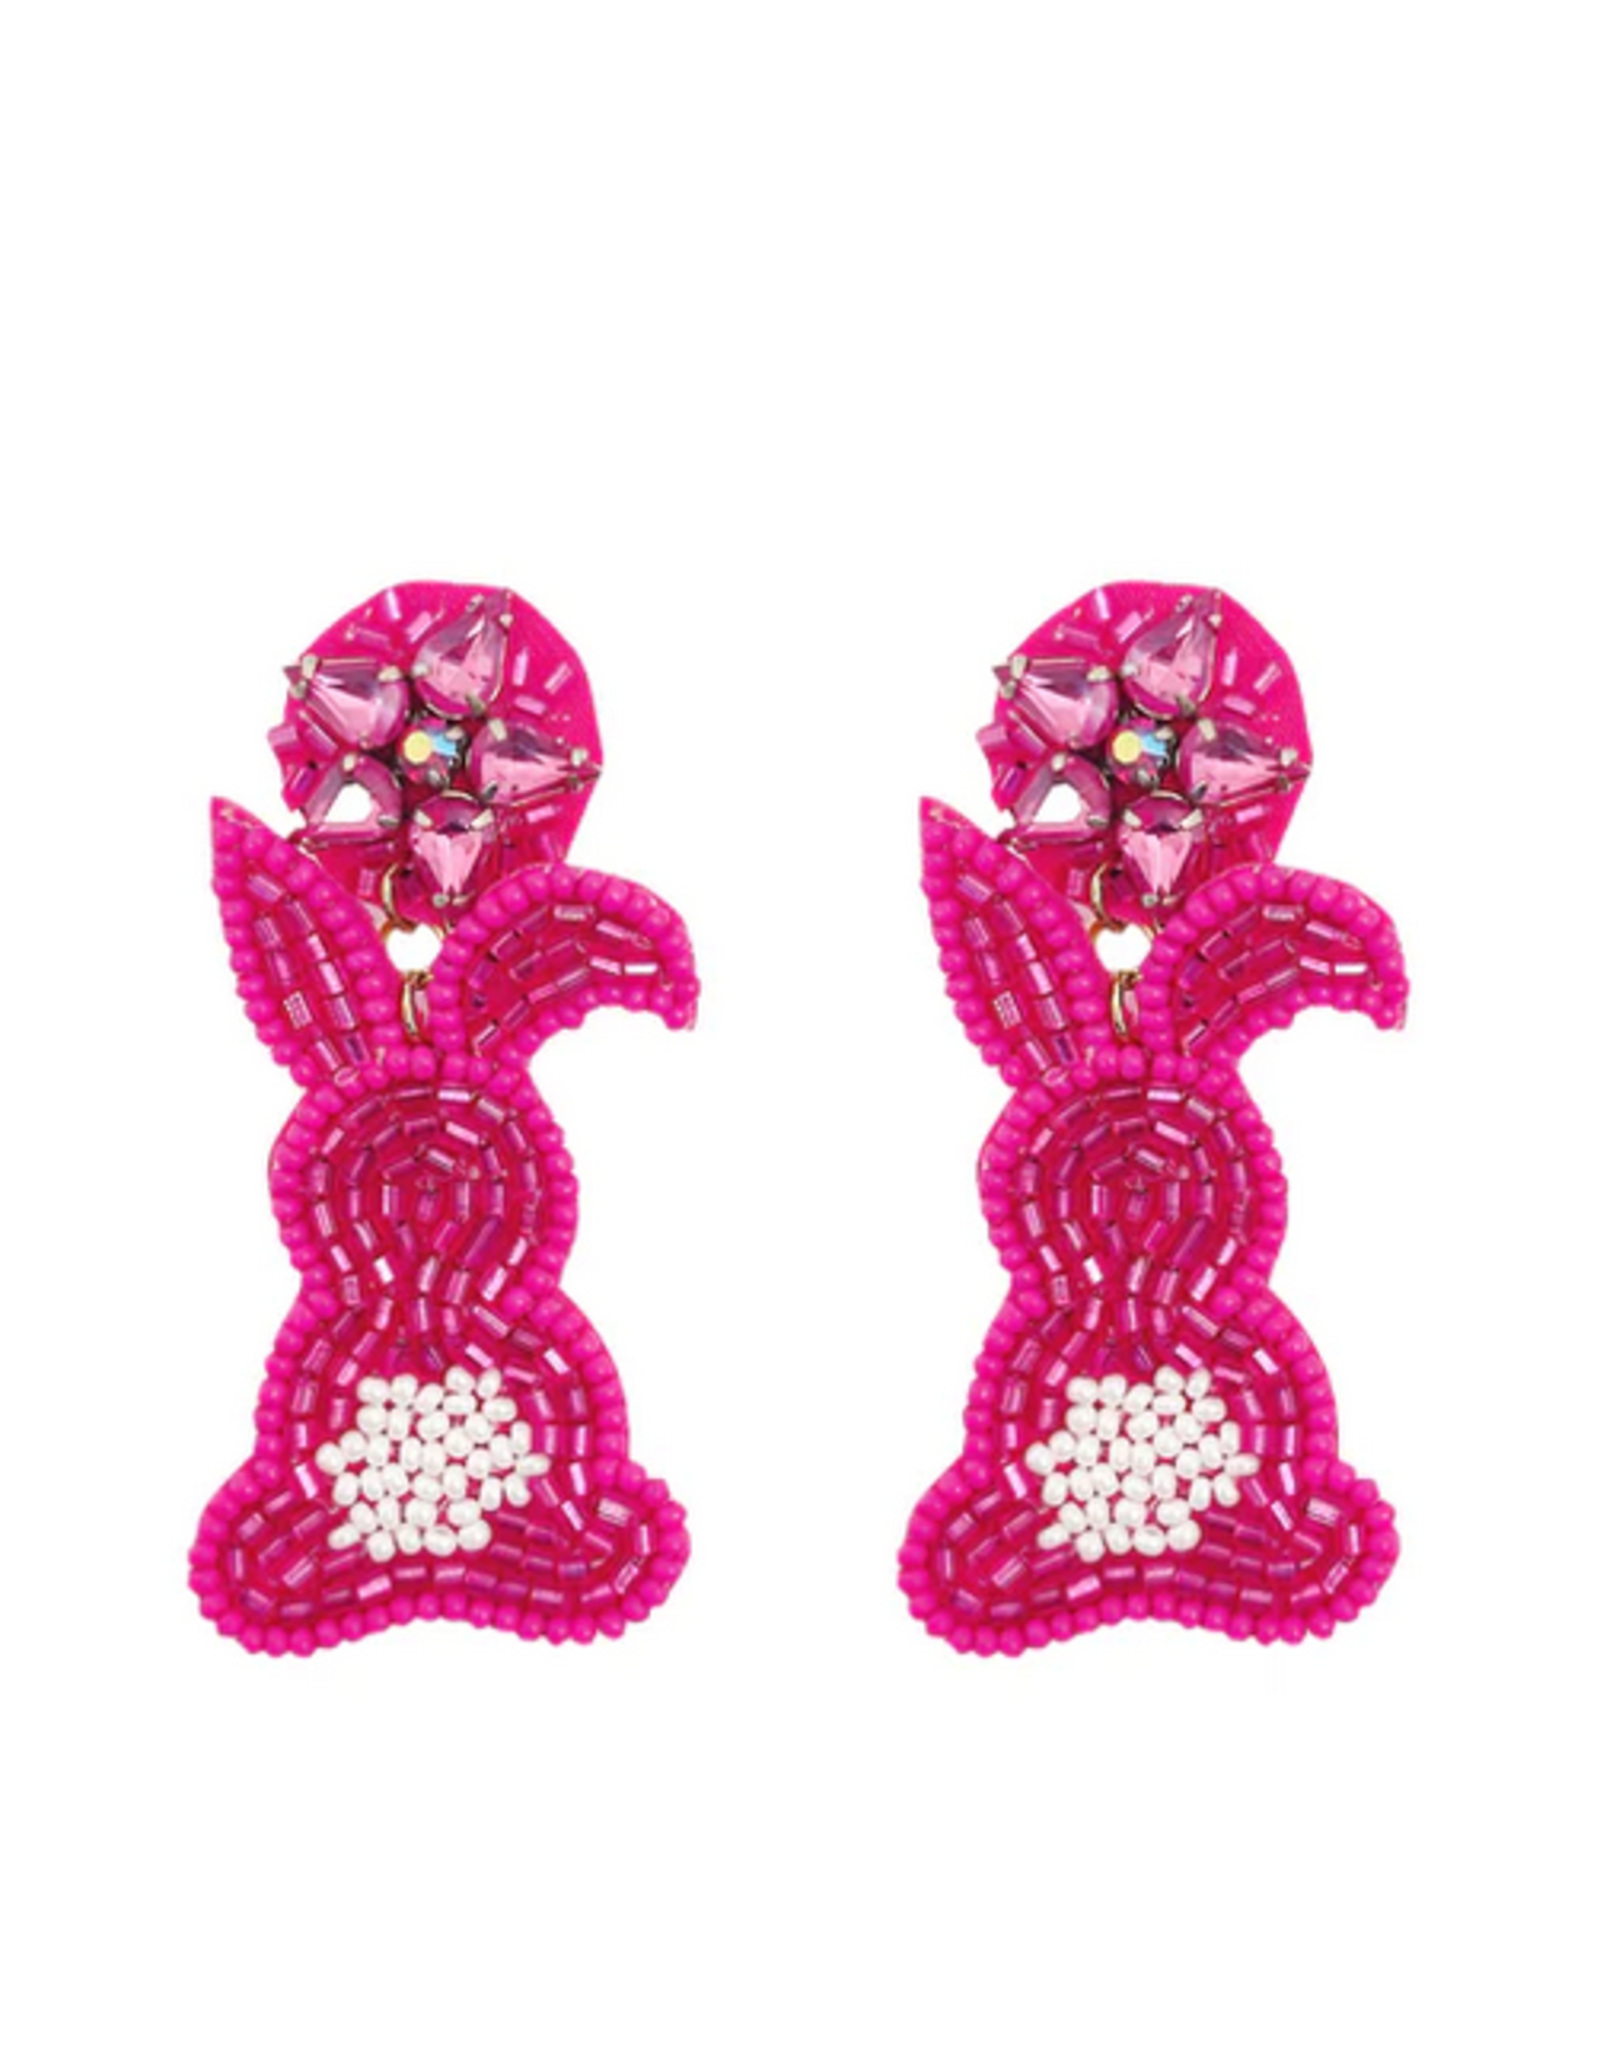 Treasure Jewels Pink Bunny Earrings